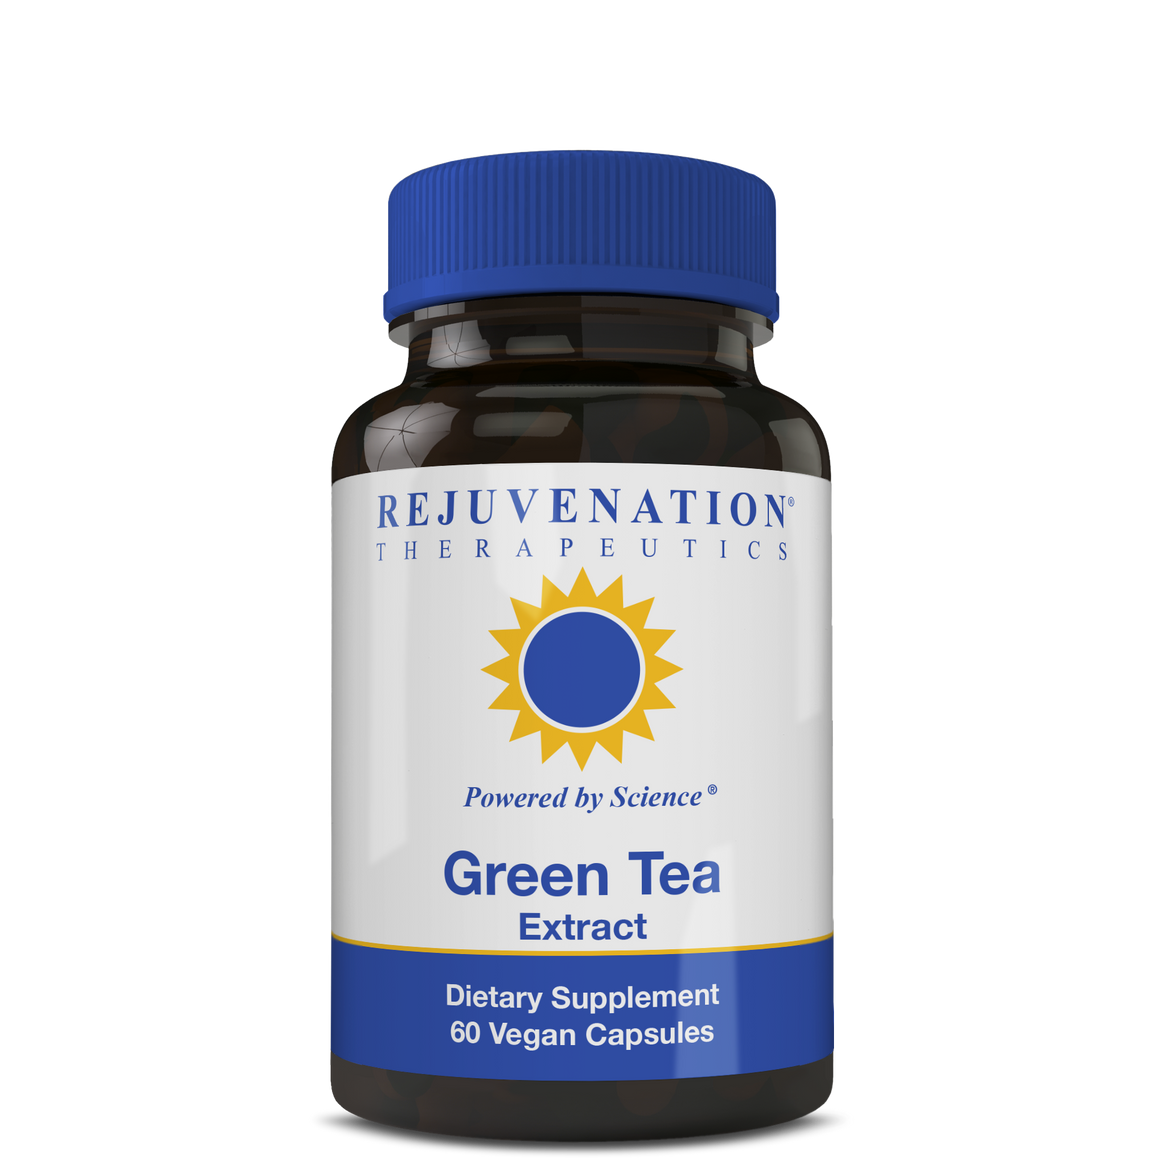 Green Tea Extract (400 mg, 60 Vegan Capsules) - Cholesterol & Vascular Support, Non-GMO, Gluten-Free